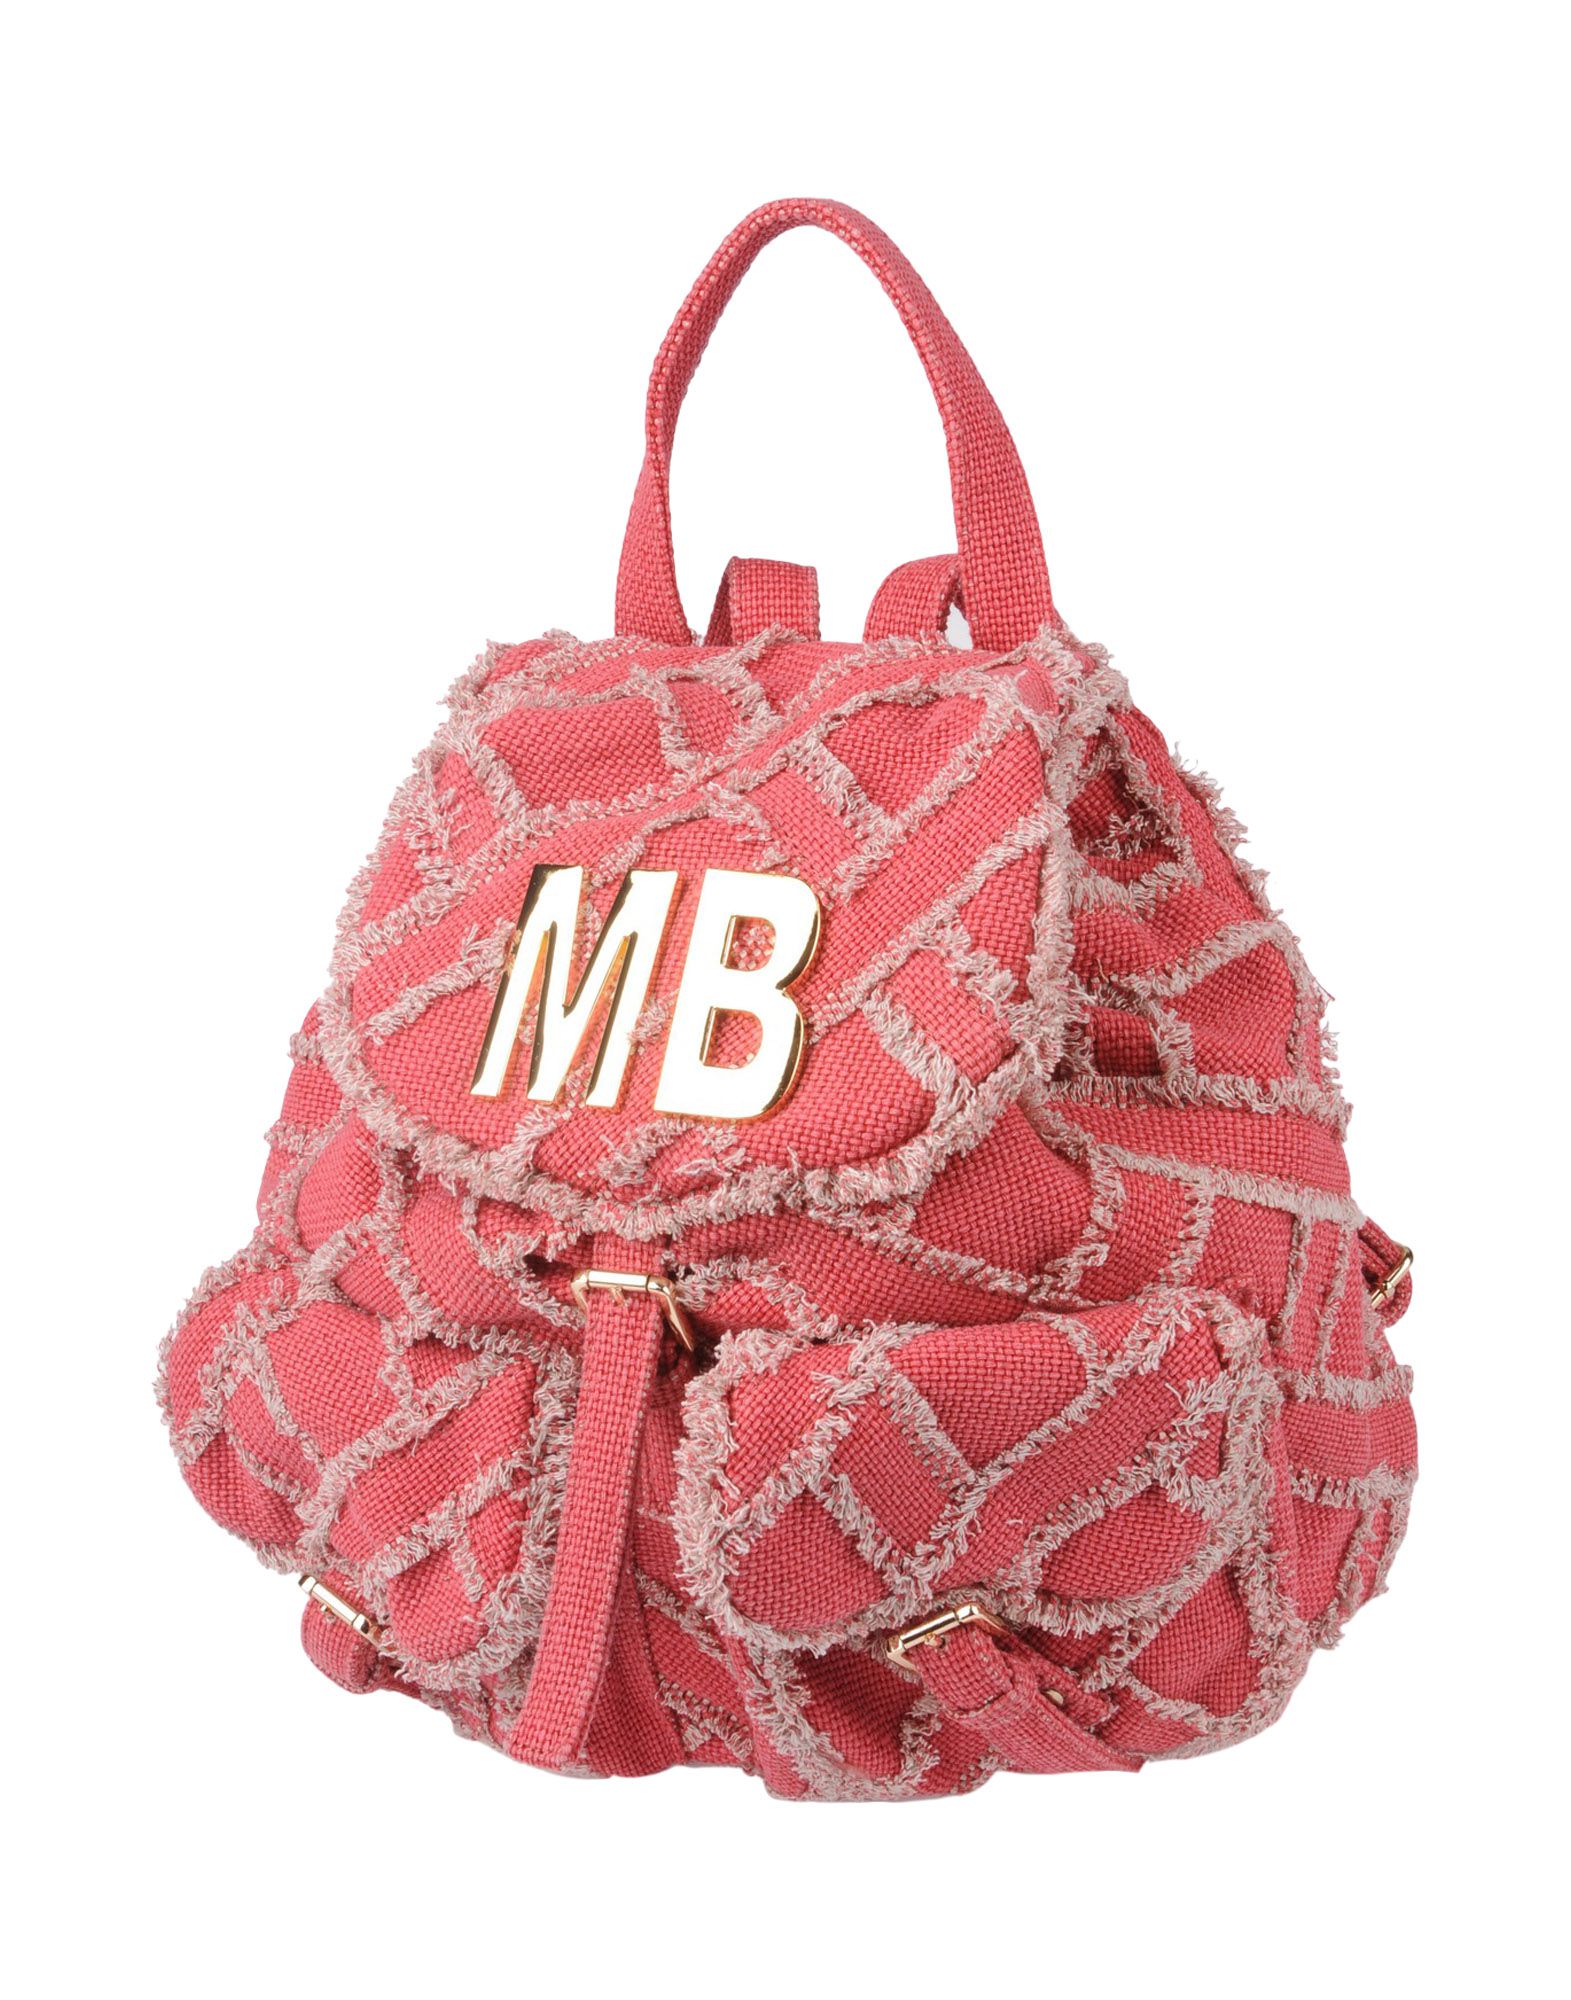 MIA BAG Backpack & fanny pack,45309742GK 1